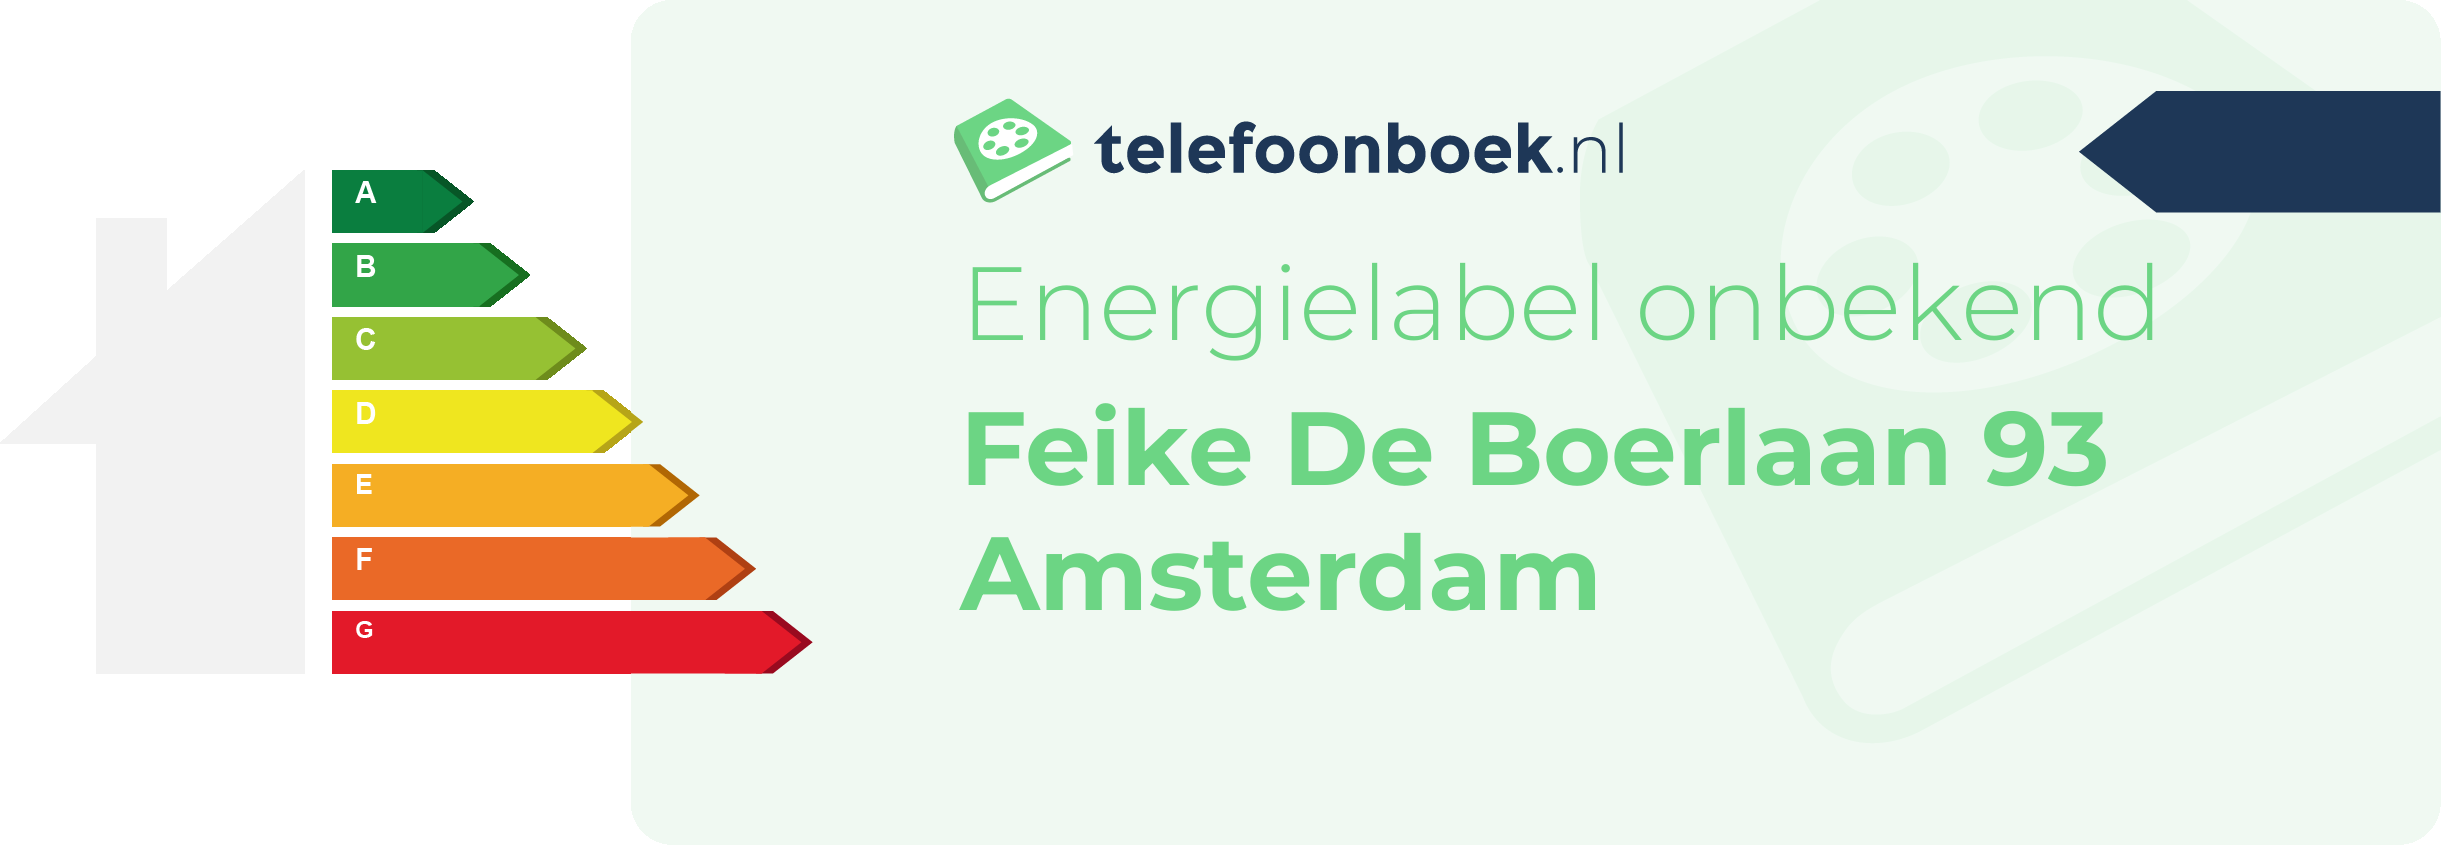 Energielabel Feike De Boerlaan 93 Amsterdam